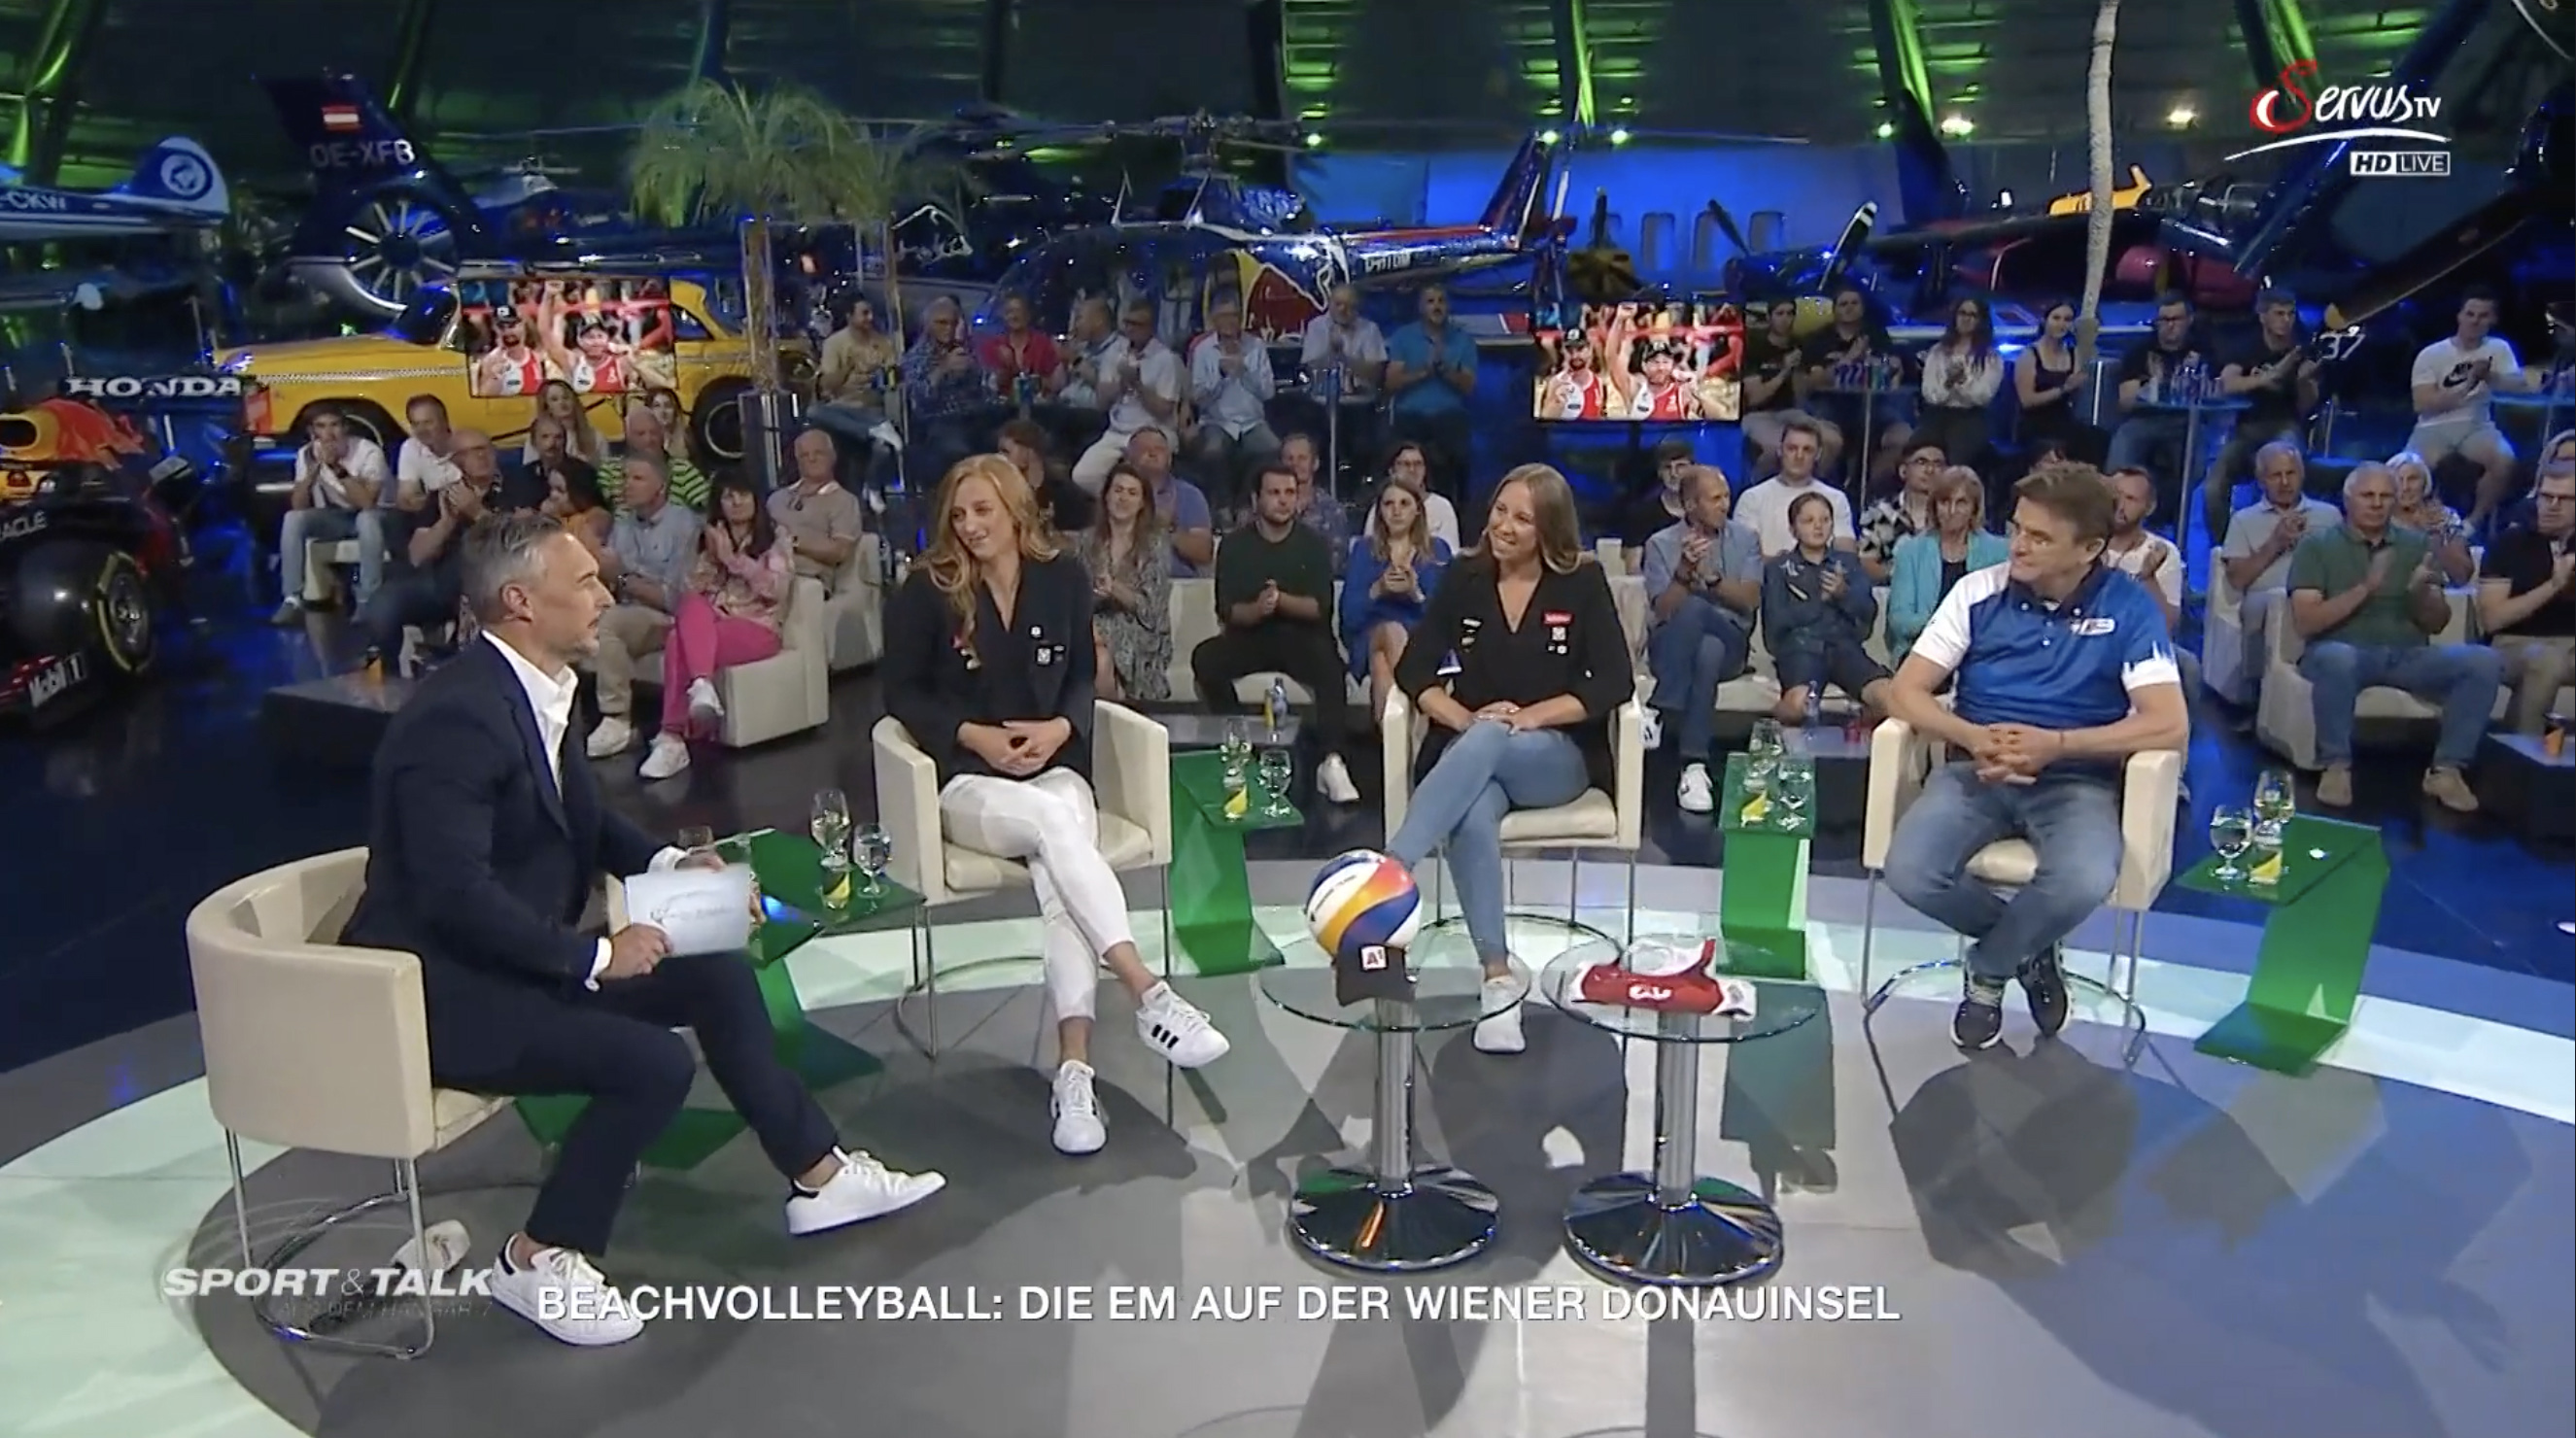 Klingers @ Sport und Talk im Hangar 7 | servusTV.com